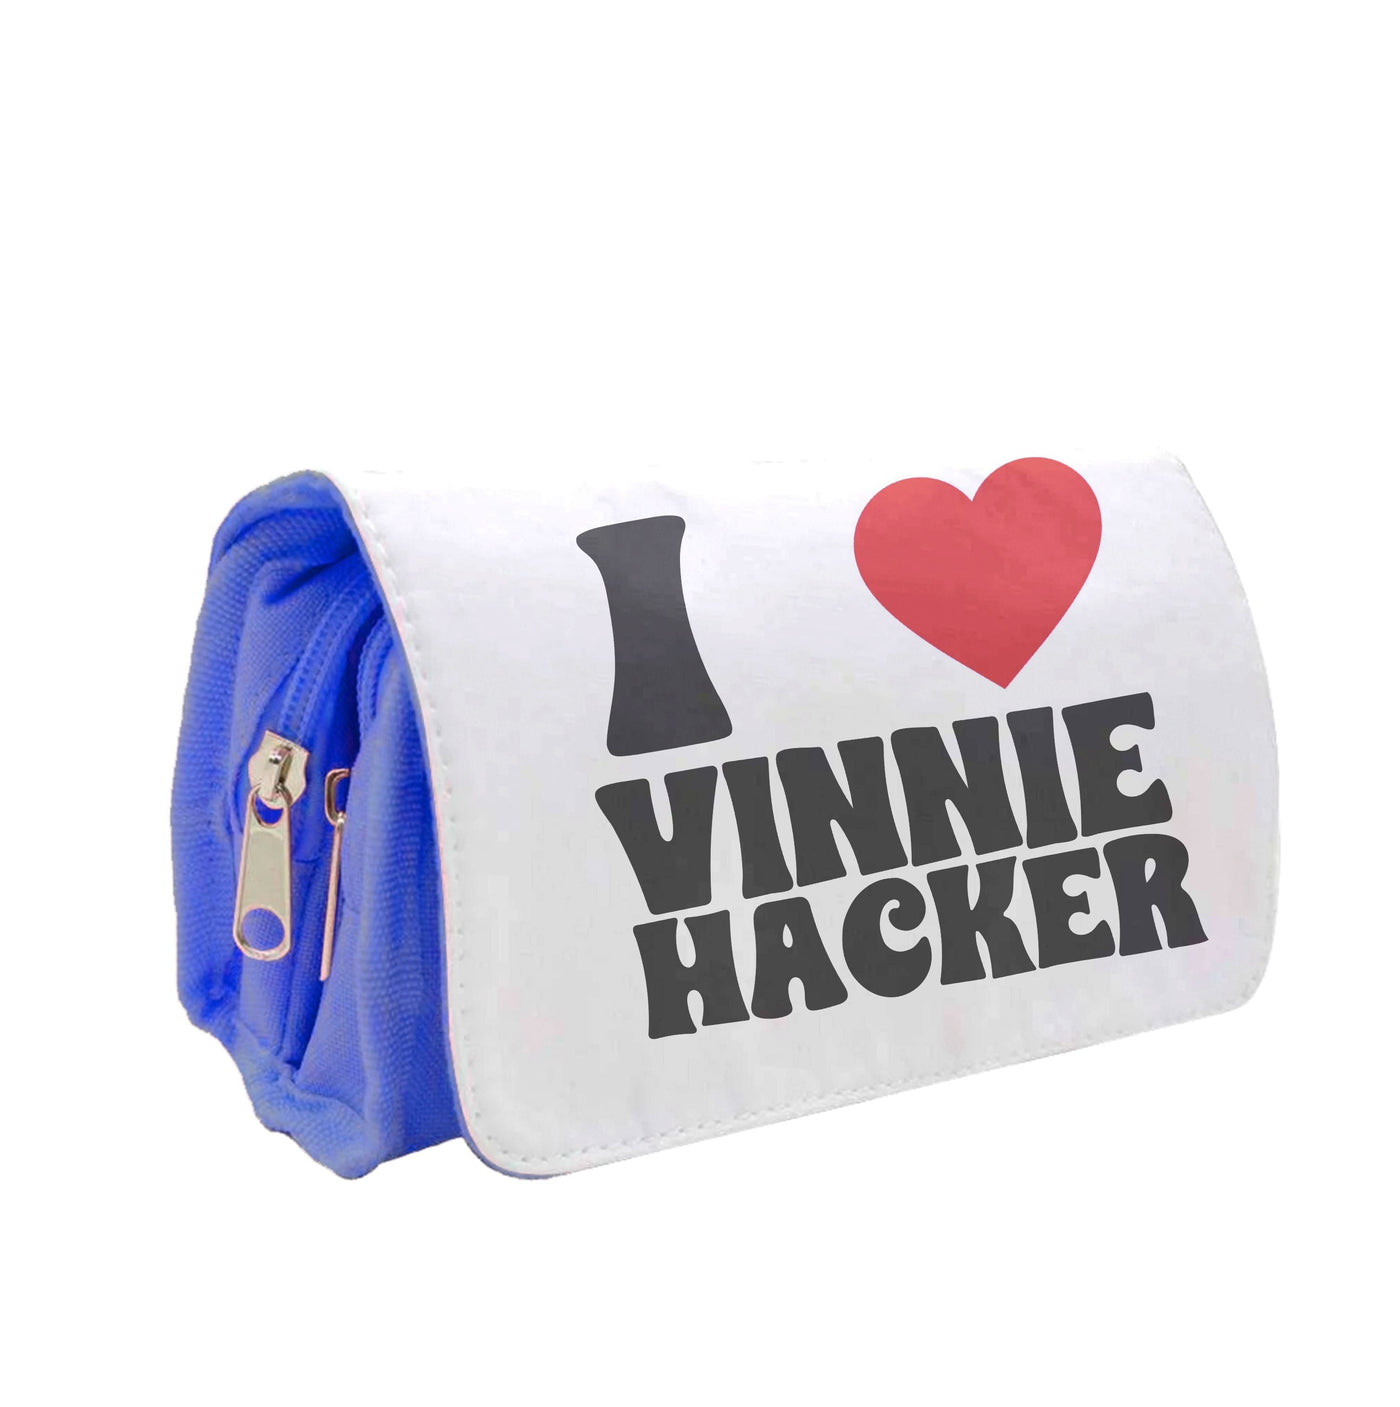 I Love Vinnie Hacker  Pencil Case